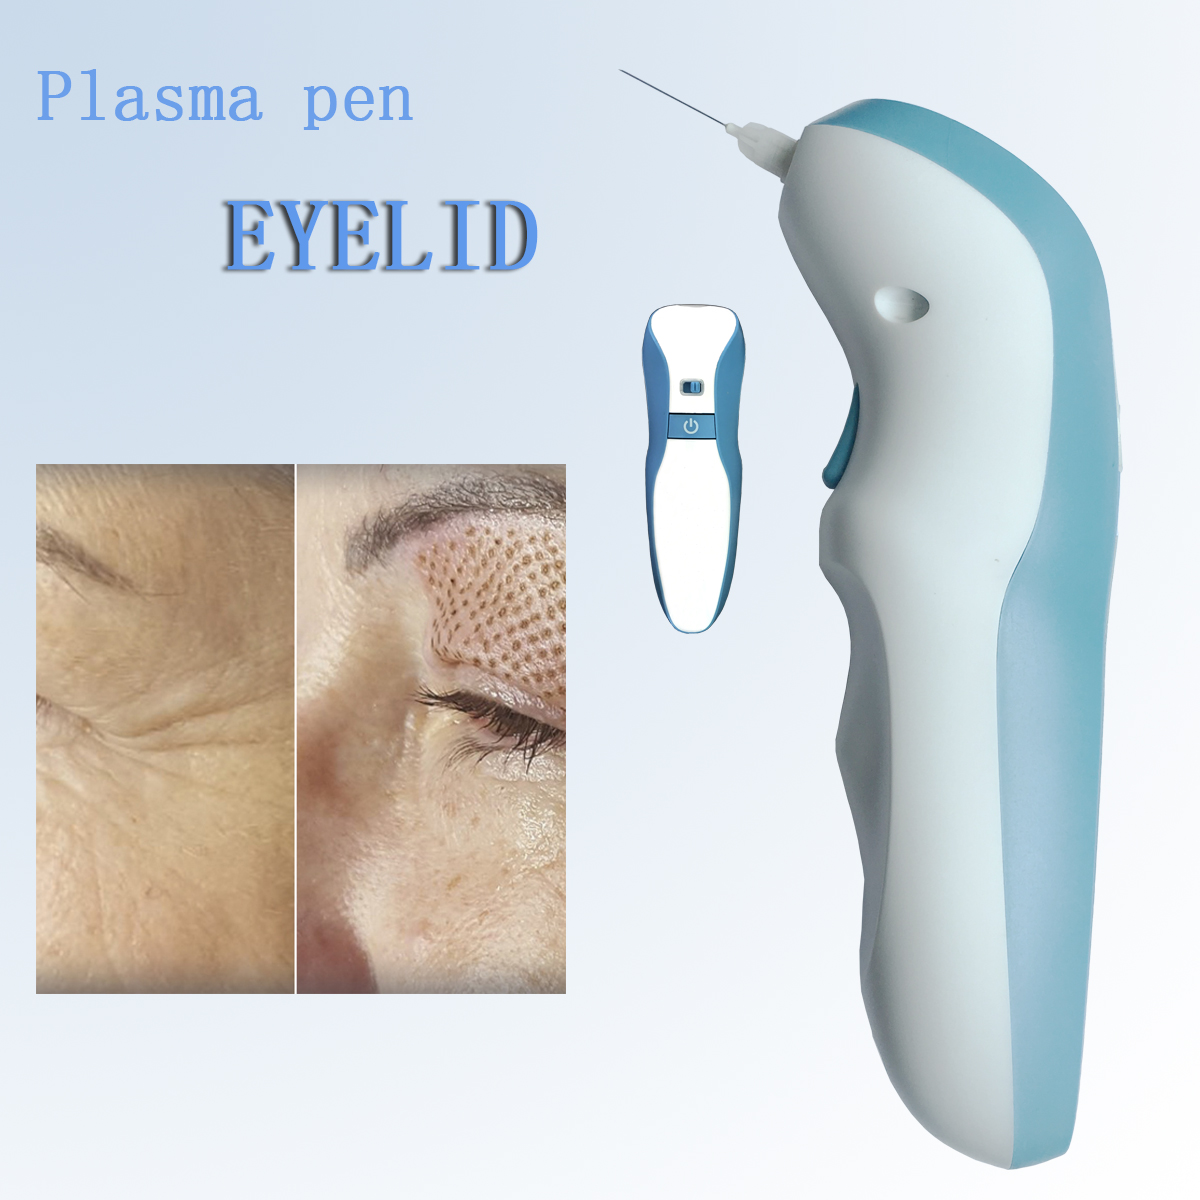 

Maglev Fibroblast Eyelid lift face skin lift Laser Plasma Pen Wrinkle spot mole removal plasmapen with light and High Quality Beauty Machine, Black